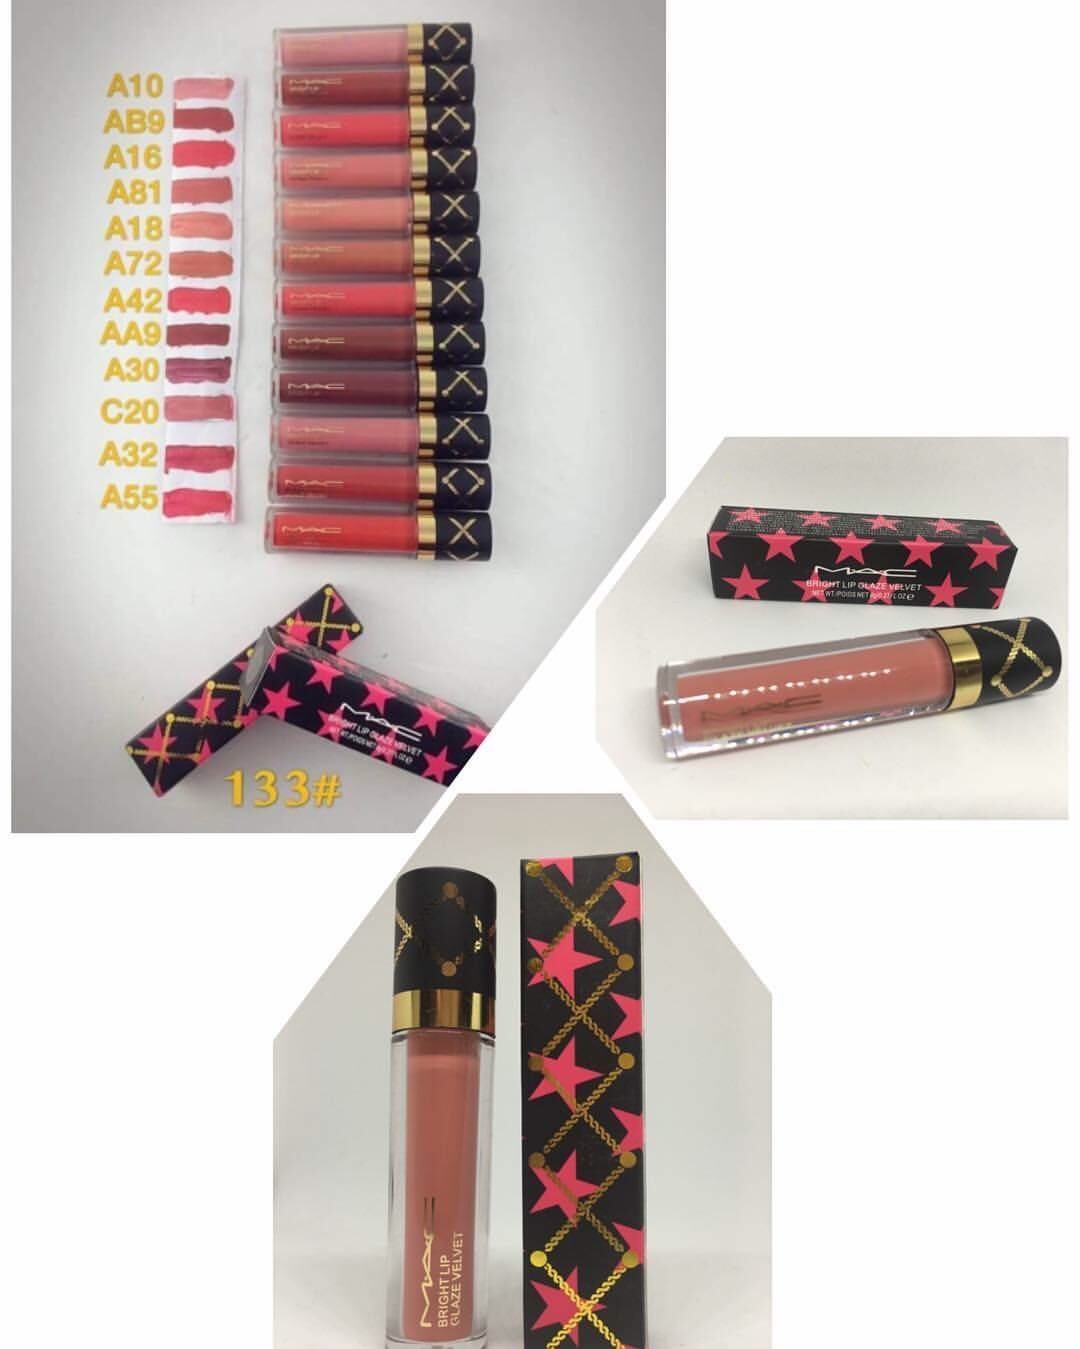 Mac  ลิปจุ่มเนื้อเเมตสีสวยติดทนนาน ปลีก130฿ ส่ง65฿ ยกโหลส่ง60฿ #เครื่องสำอางราคาถูก #เครื่องสำอางแบรนด์เนม #ขายส่ง #beautyact #ขายส่งราคาถูก #เครื่องสำอาง #เครื่องสำอางค์ #ขายลิปสติก #ลิปแมท #lipstick #matte #mac #ลิปเนื้อเเมท #ลิปสติกเนื้อแมท  #ลิปสติก #ลิปสติกเนื้อแมท  #ลิปmac  #ขายส่งถูกที่สุด  #เครื่องสำอางค์แบรนด์  #macglazevelvet 📌www.beauty-act.com 📌https://m.facebook.com/Madamelisa-by-beauty-act-475536312514814/  พร้อมส่ง สต็อคเเน่น 👇👇ปลีก-ส่ง-สั่งซื้อ-สมัครตัวเเทน-คลิกเลย👇👇 https://line.me/R/ti/p/%40gjb3912t  เเอดมินรอให้คำปรึกษาค่ะ  http://line.me/ti/p/lj-1Sd-znD  064-9971196 รูปที่ 1